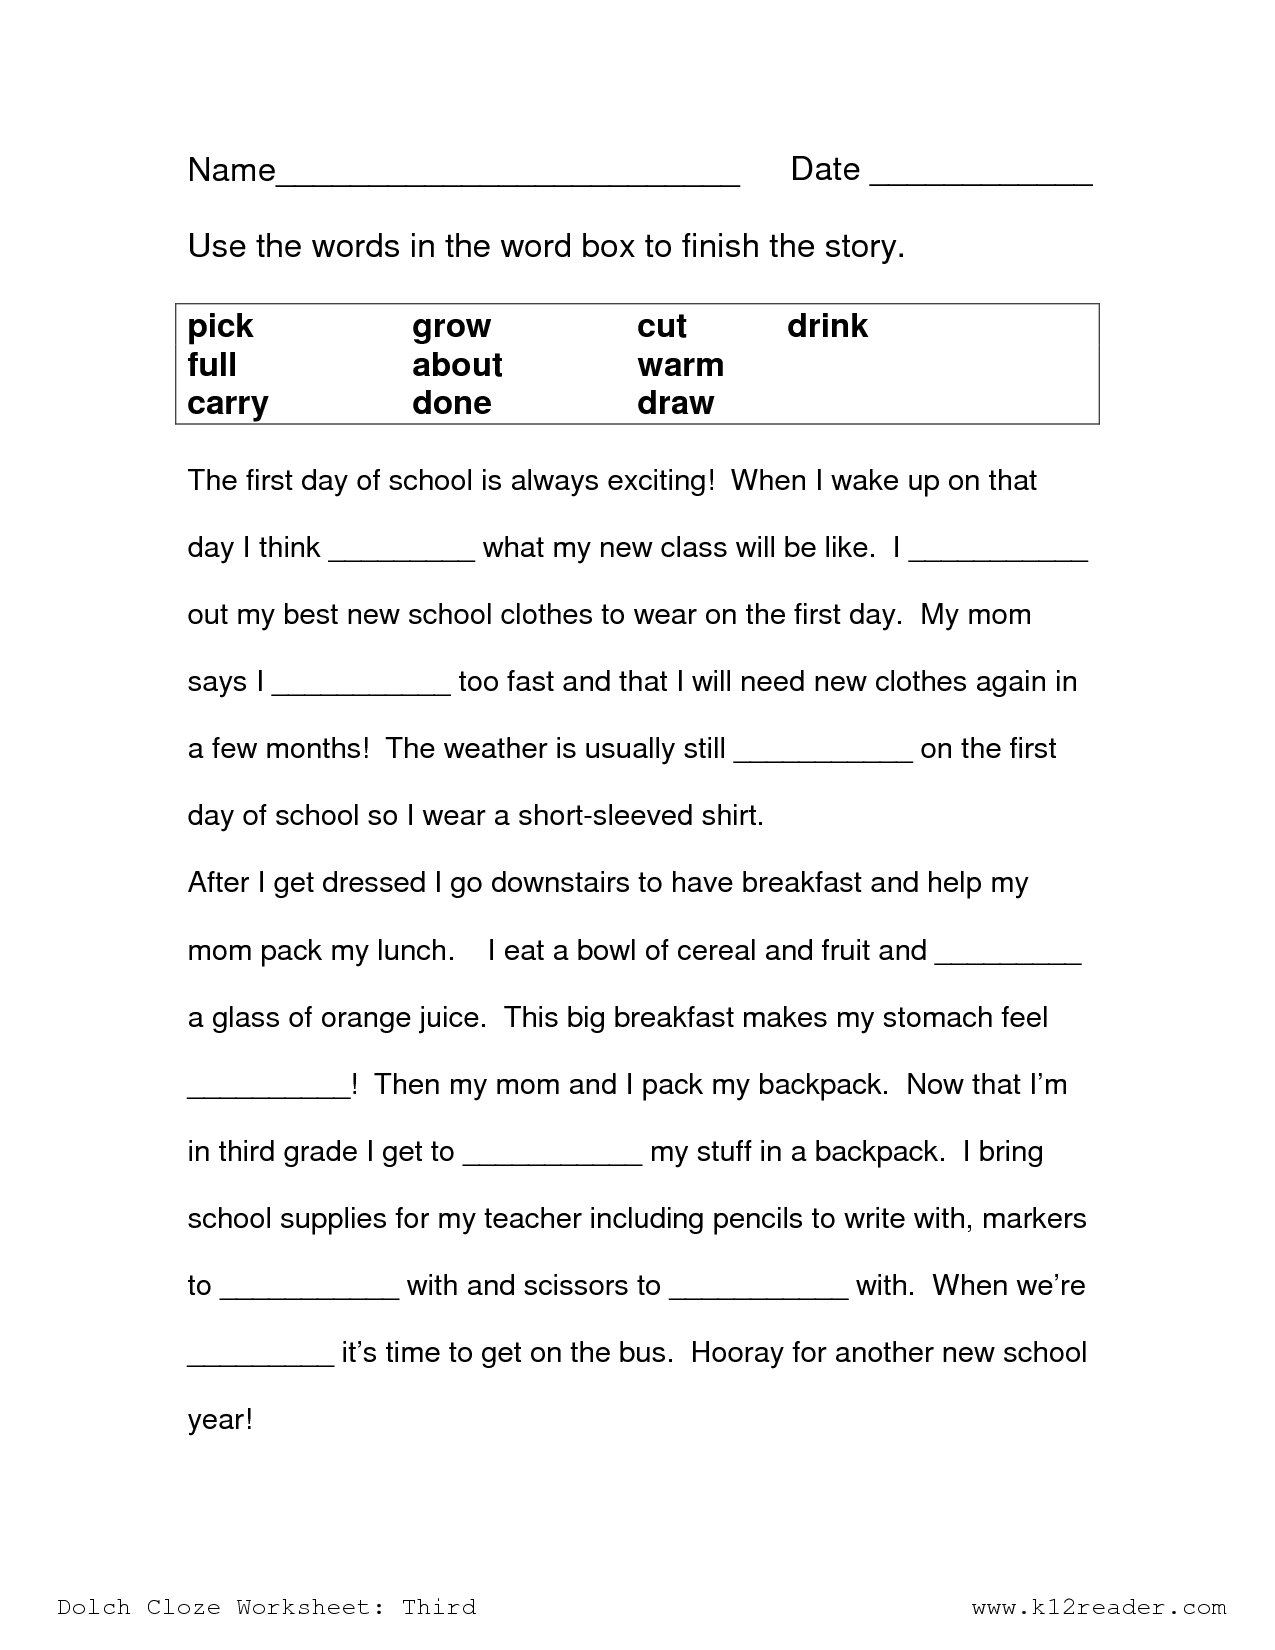 Cloze Passages Worksheets 3rd Grade